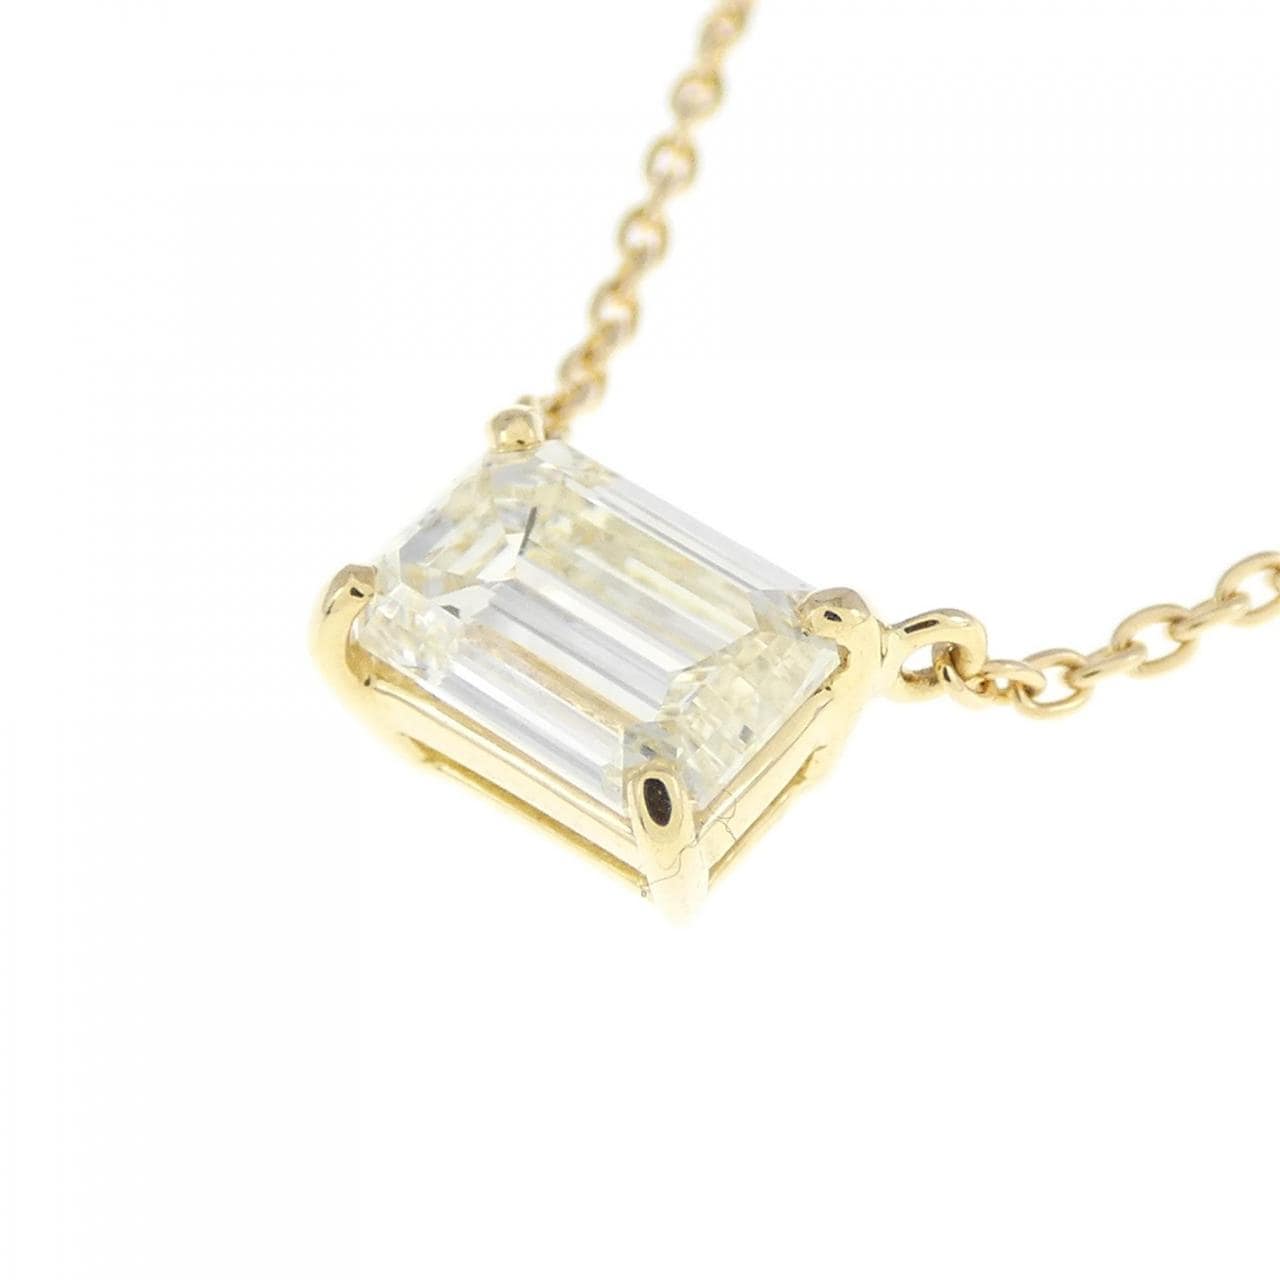 [Remake] K18YG Diamond necklace 0.644CT L VVS2 emerald cut